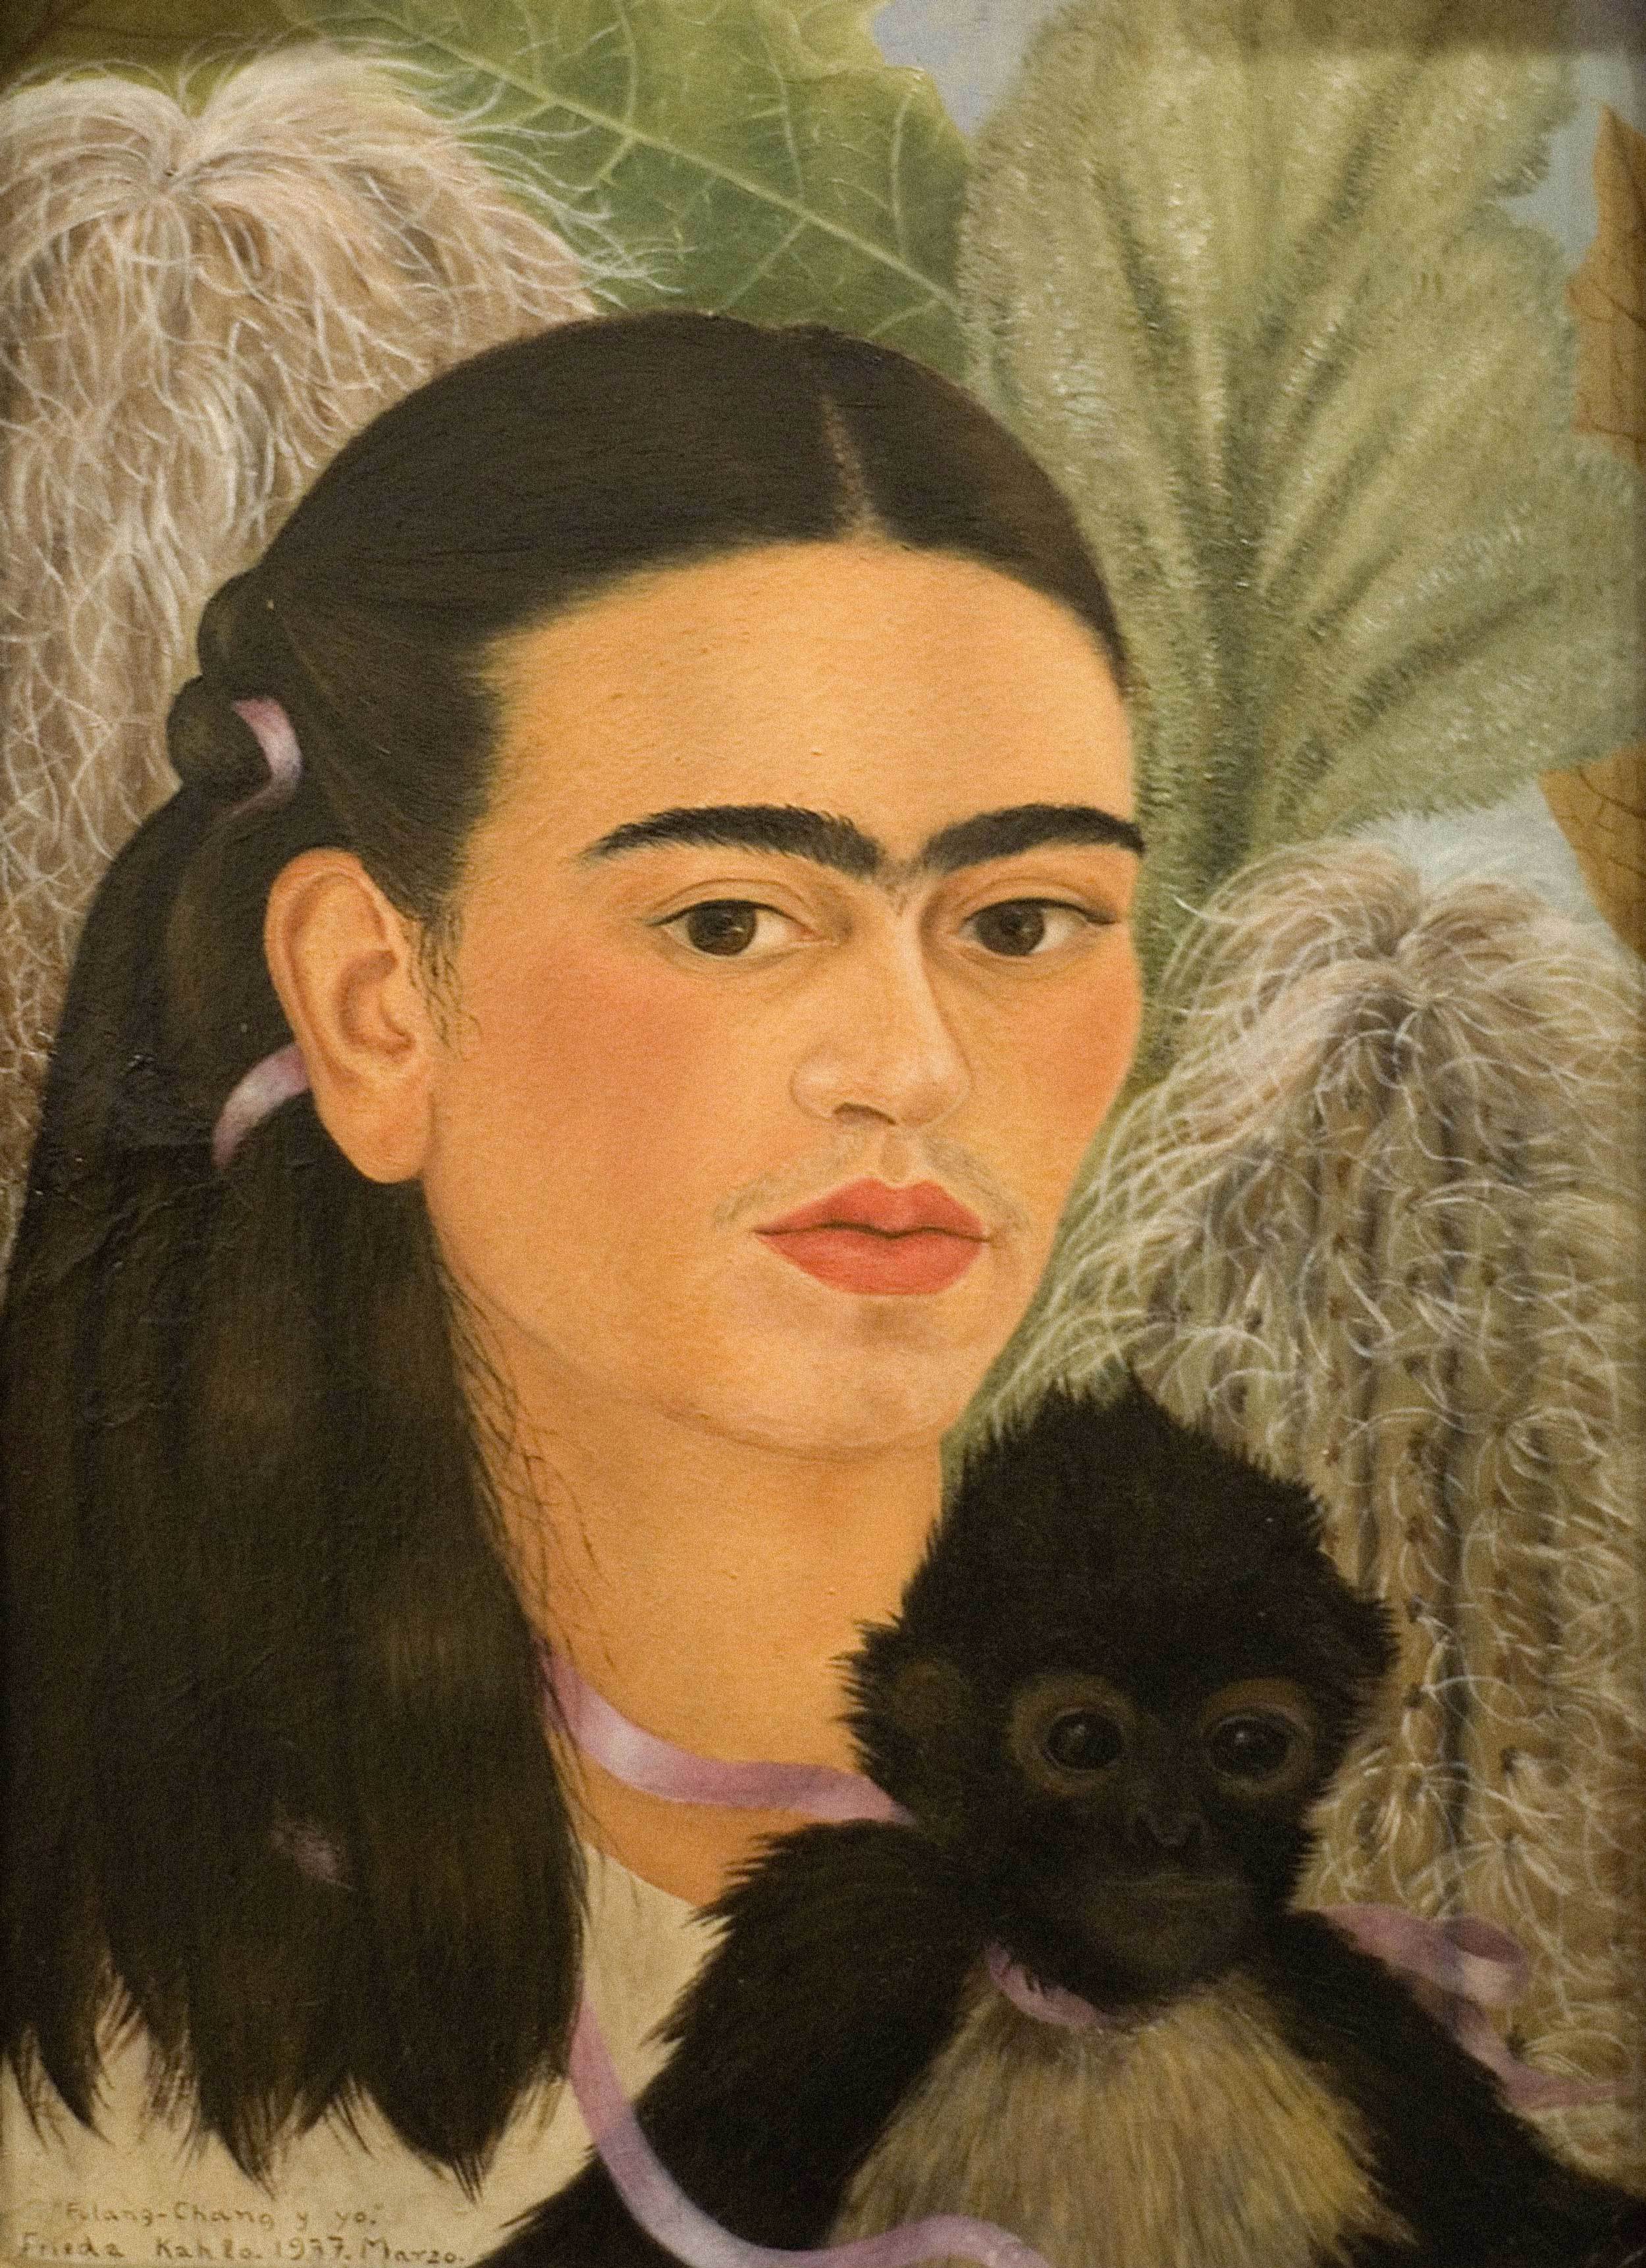 Frida Kahlo - Fulang-Chang and I, 1937, Bilderrahmen weiß